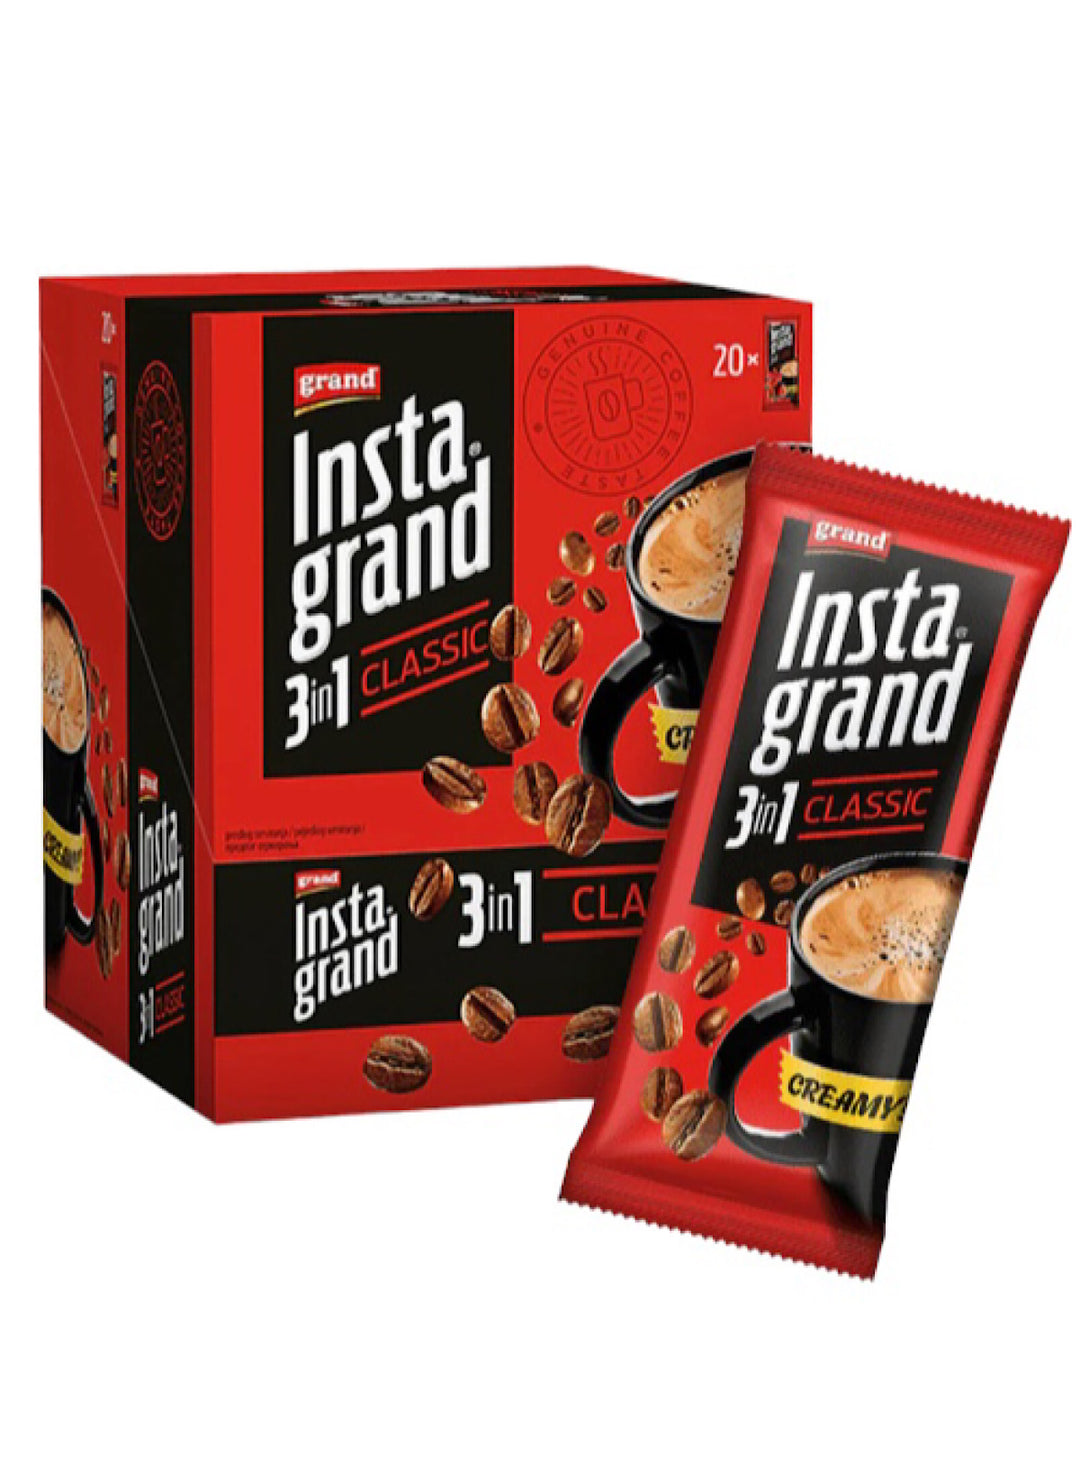 Insta grand 3 in1 Coffee- Grand- 20 bags 18g